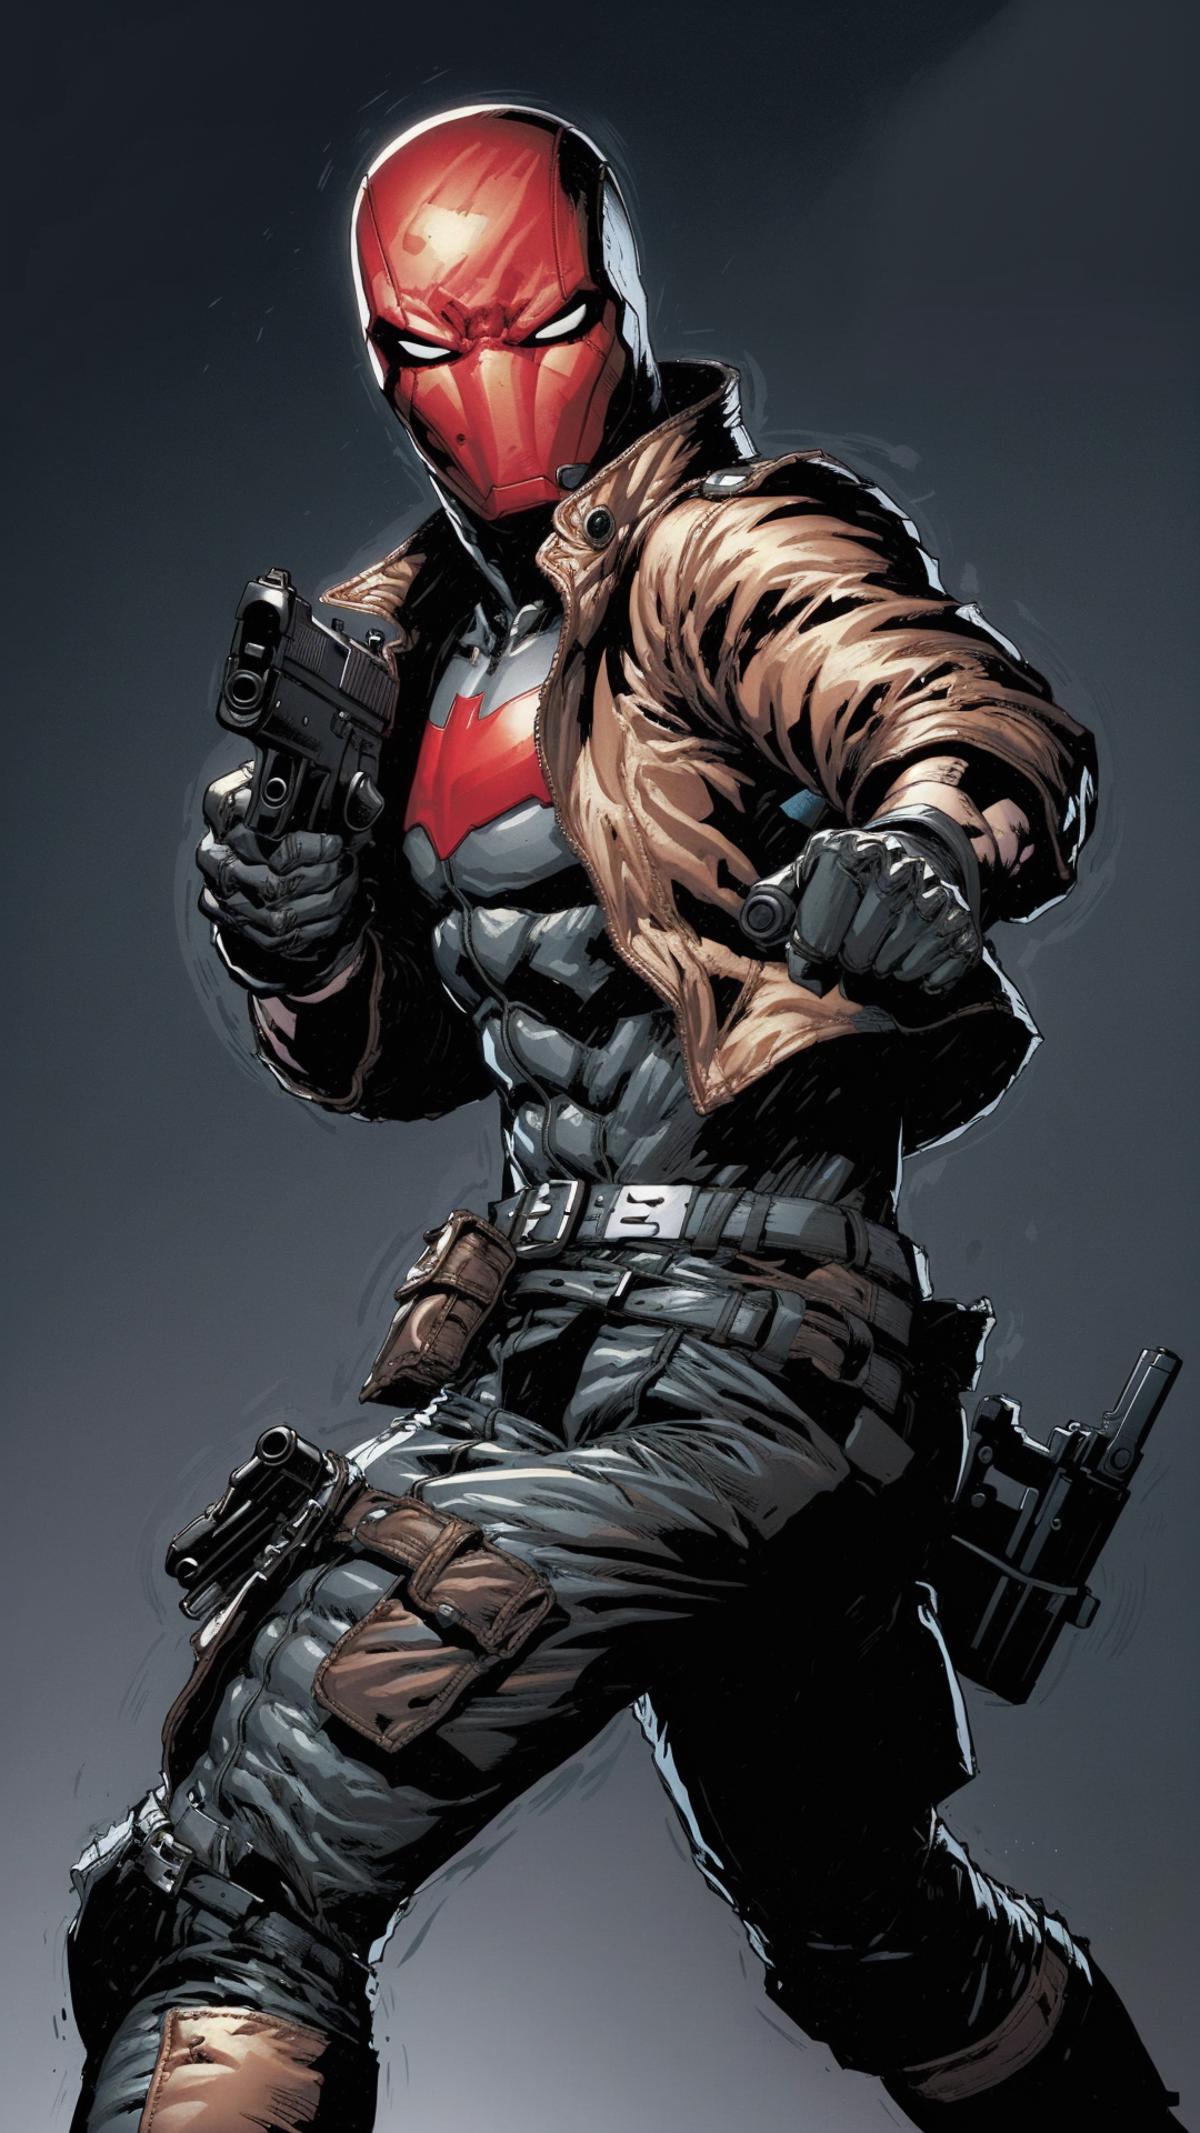 Red Hood DC Comics image by sajeas